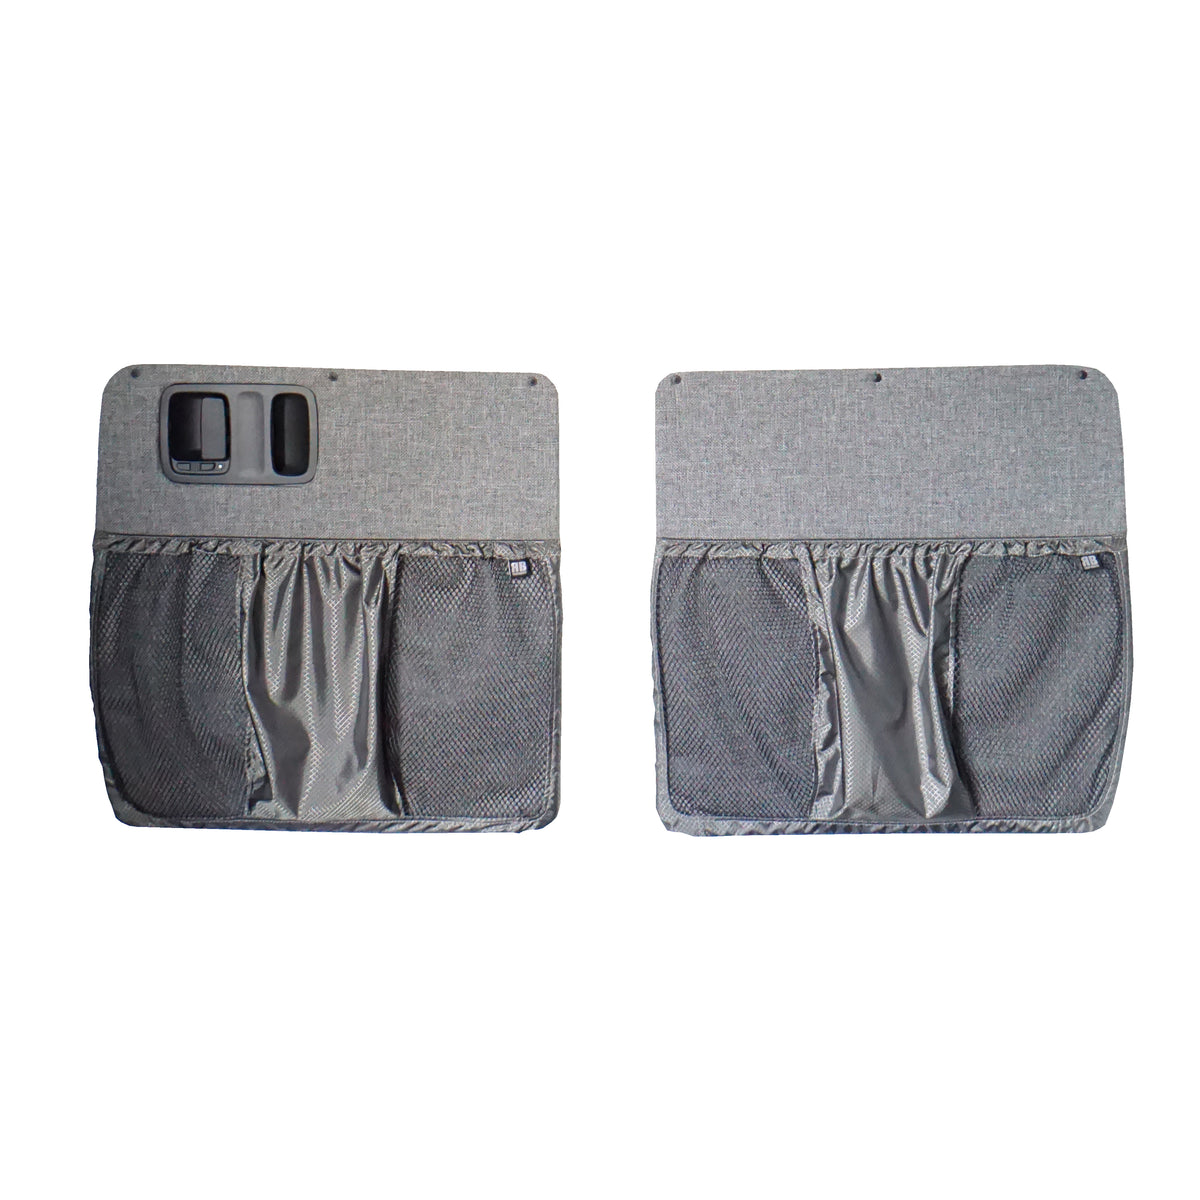 2016+ Metris Van Rear Lower Door Stuff Bag Kit w/Graphite Upholstered Panels